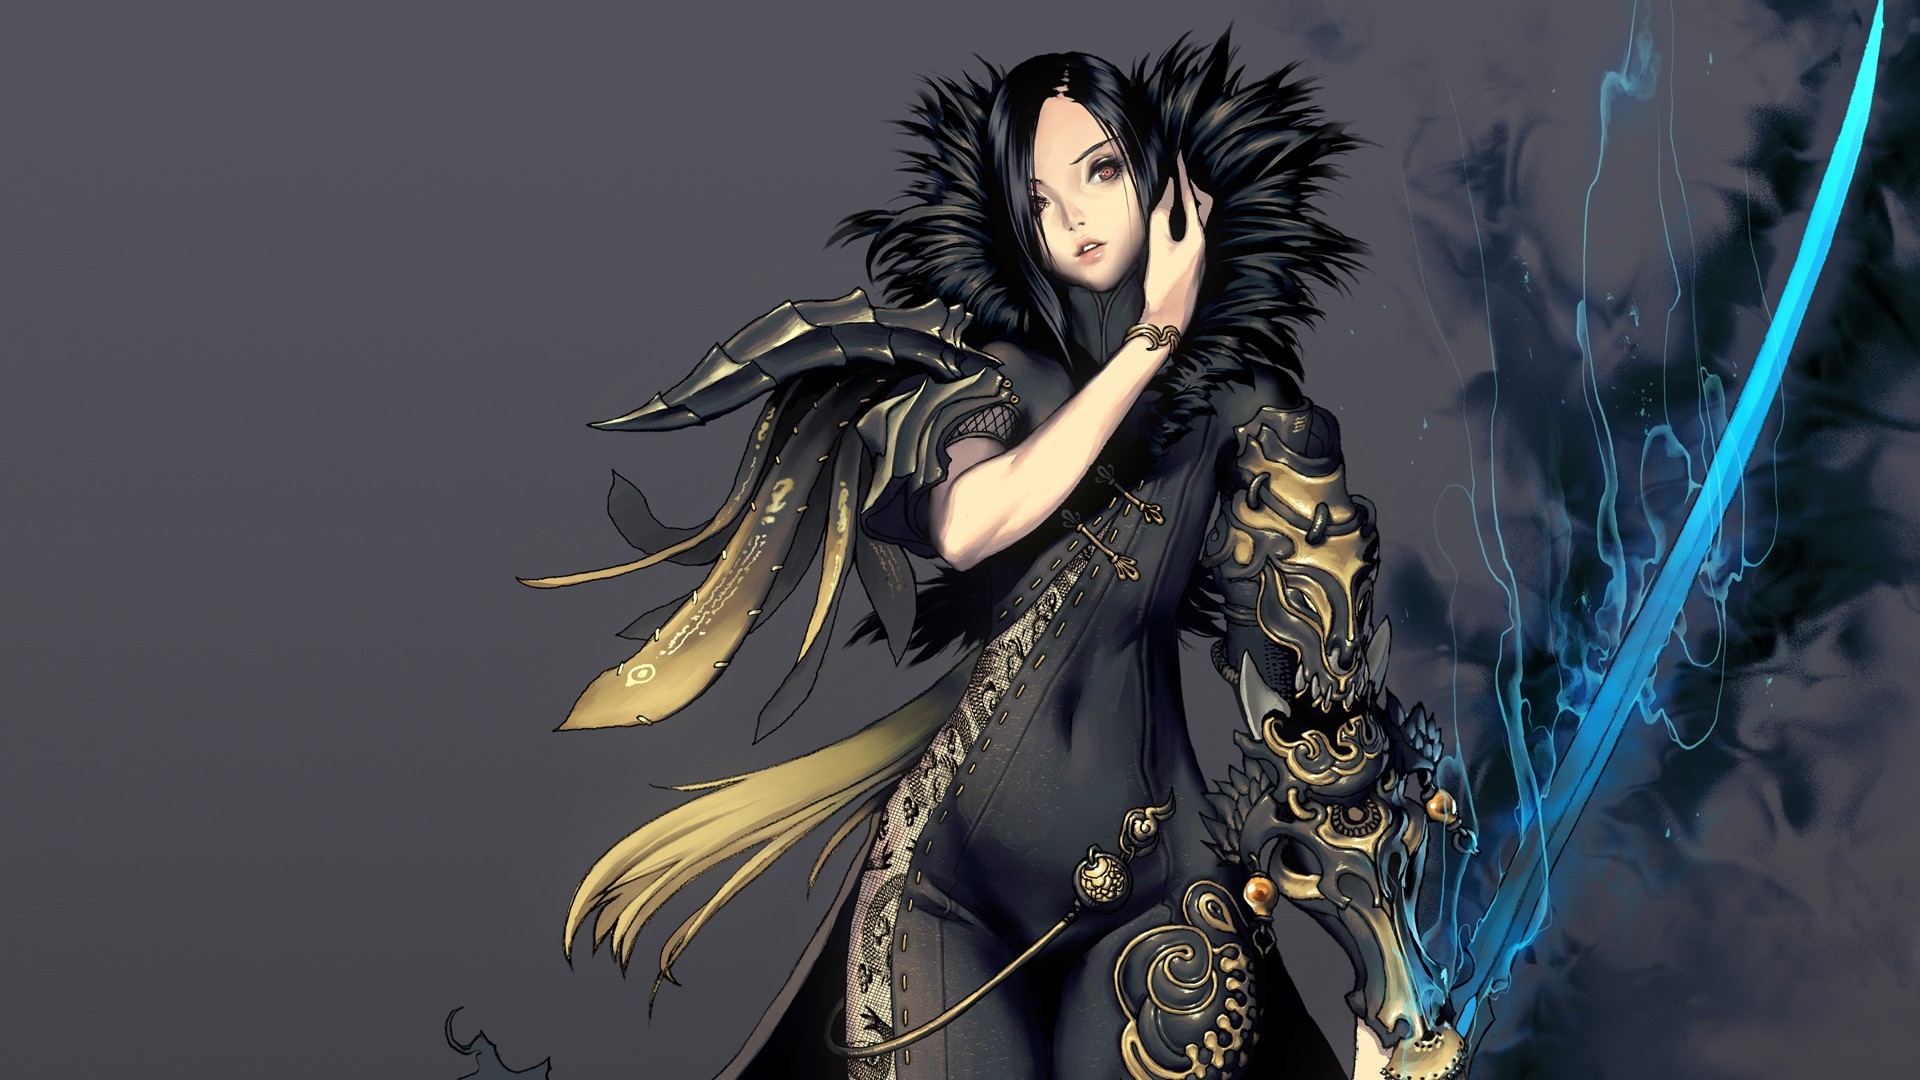 Anime 1920x1080 Blade & Soul anime girls sword Jin fantasy art fantasy girl women with swords simple background dark hair women black hair